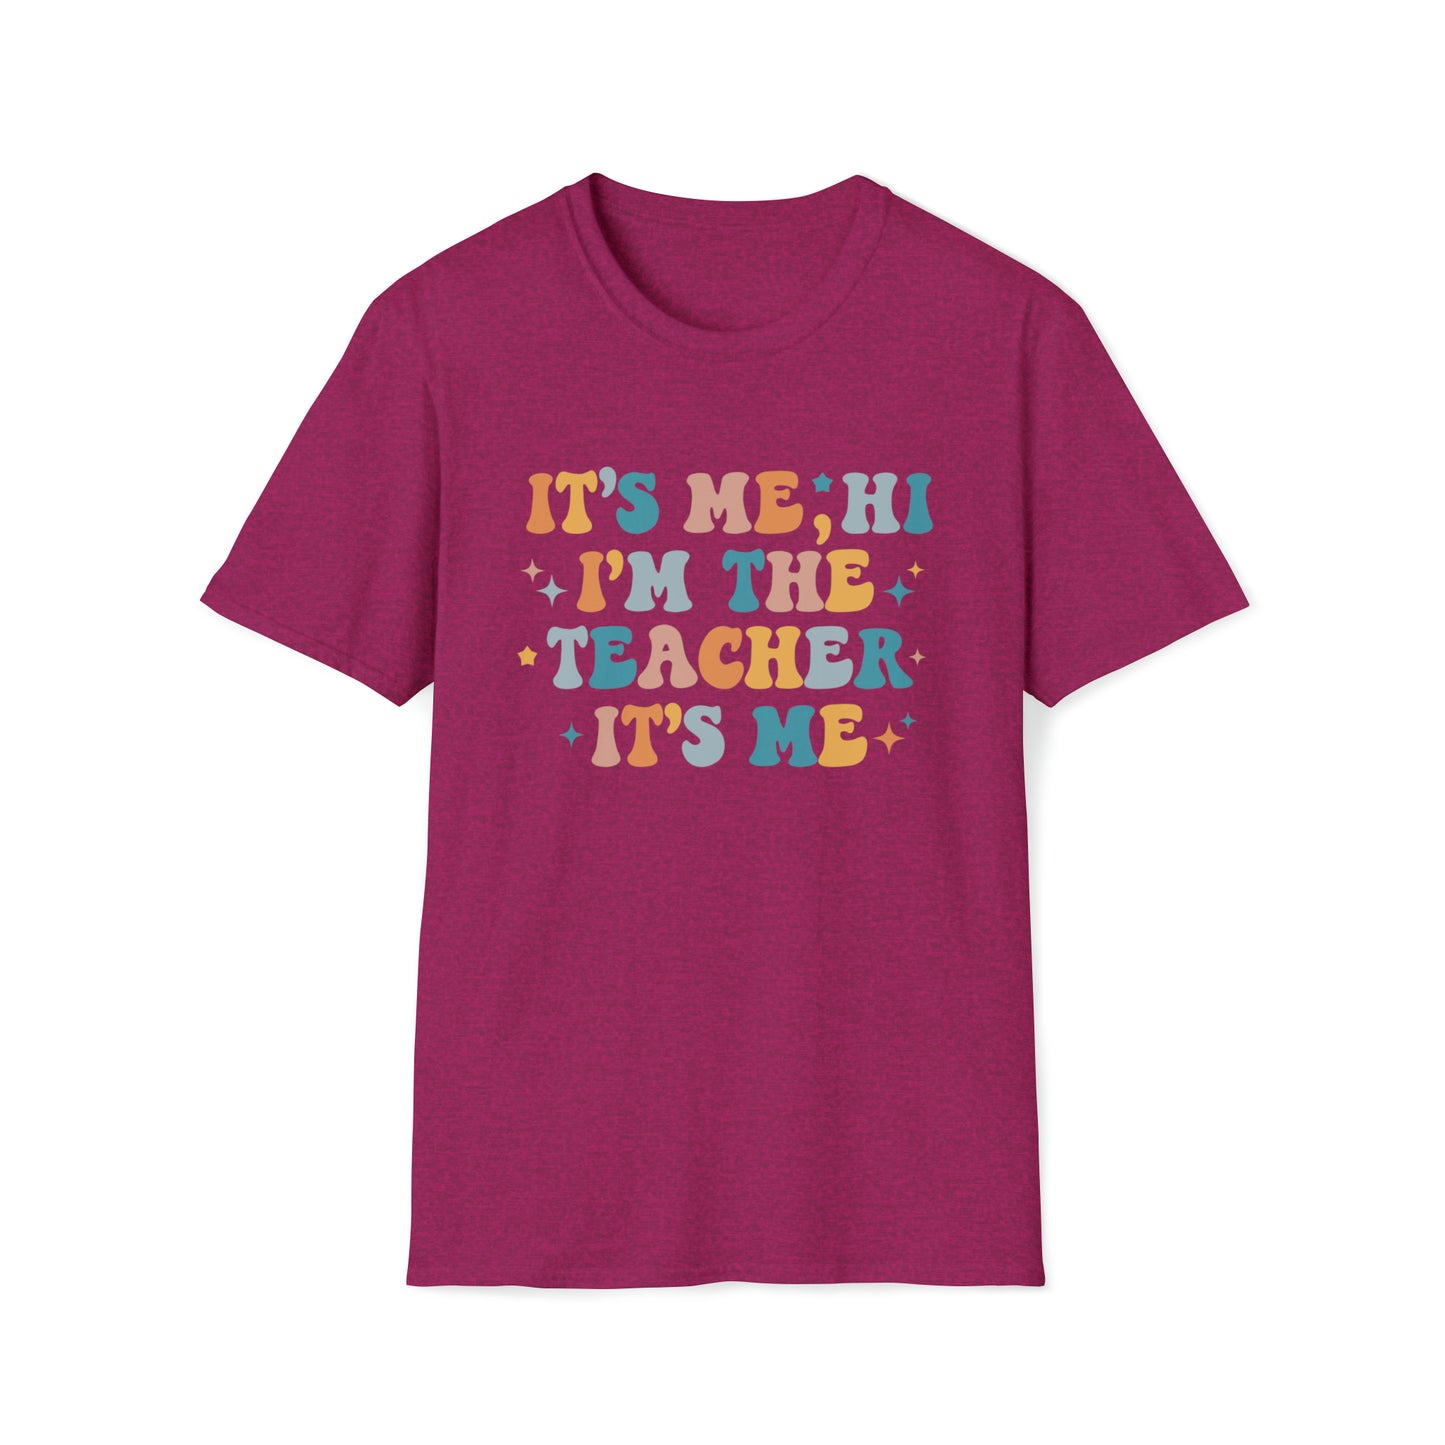 "It's Me, Hi, Im The Teacher, It's Me" Gildan Unisex Softstyle T-Shirt